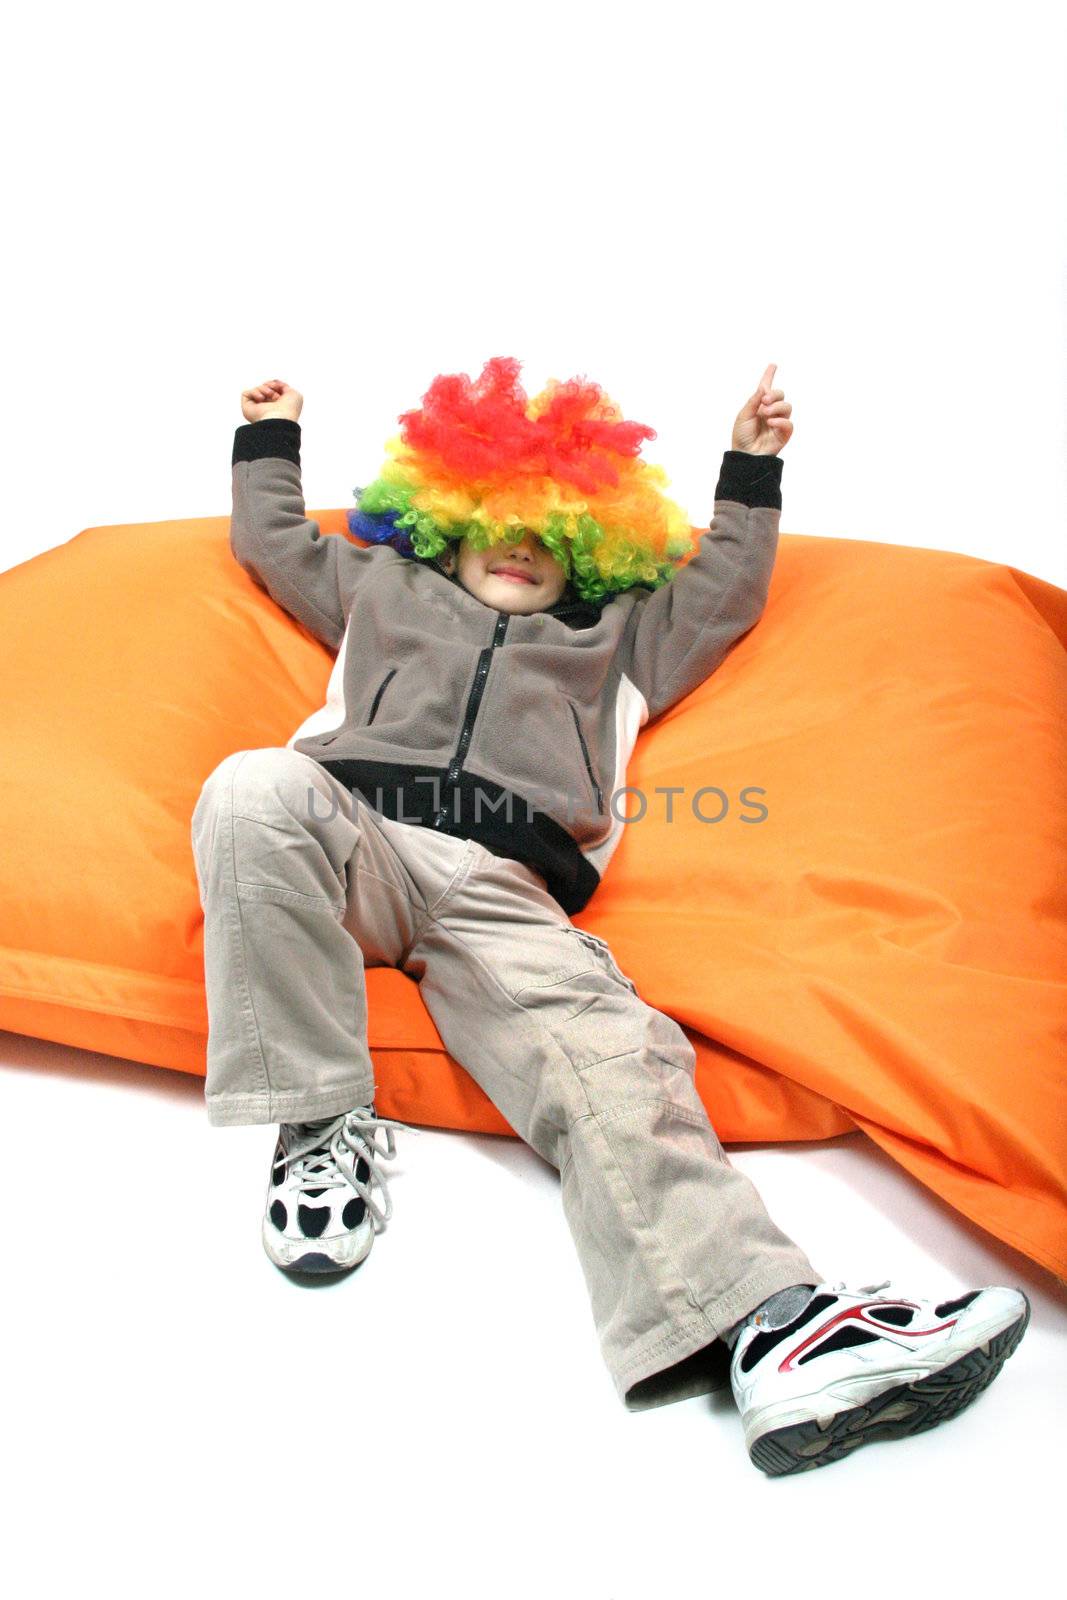 happy clown by jpcasais